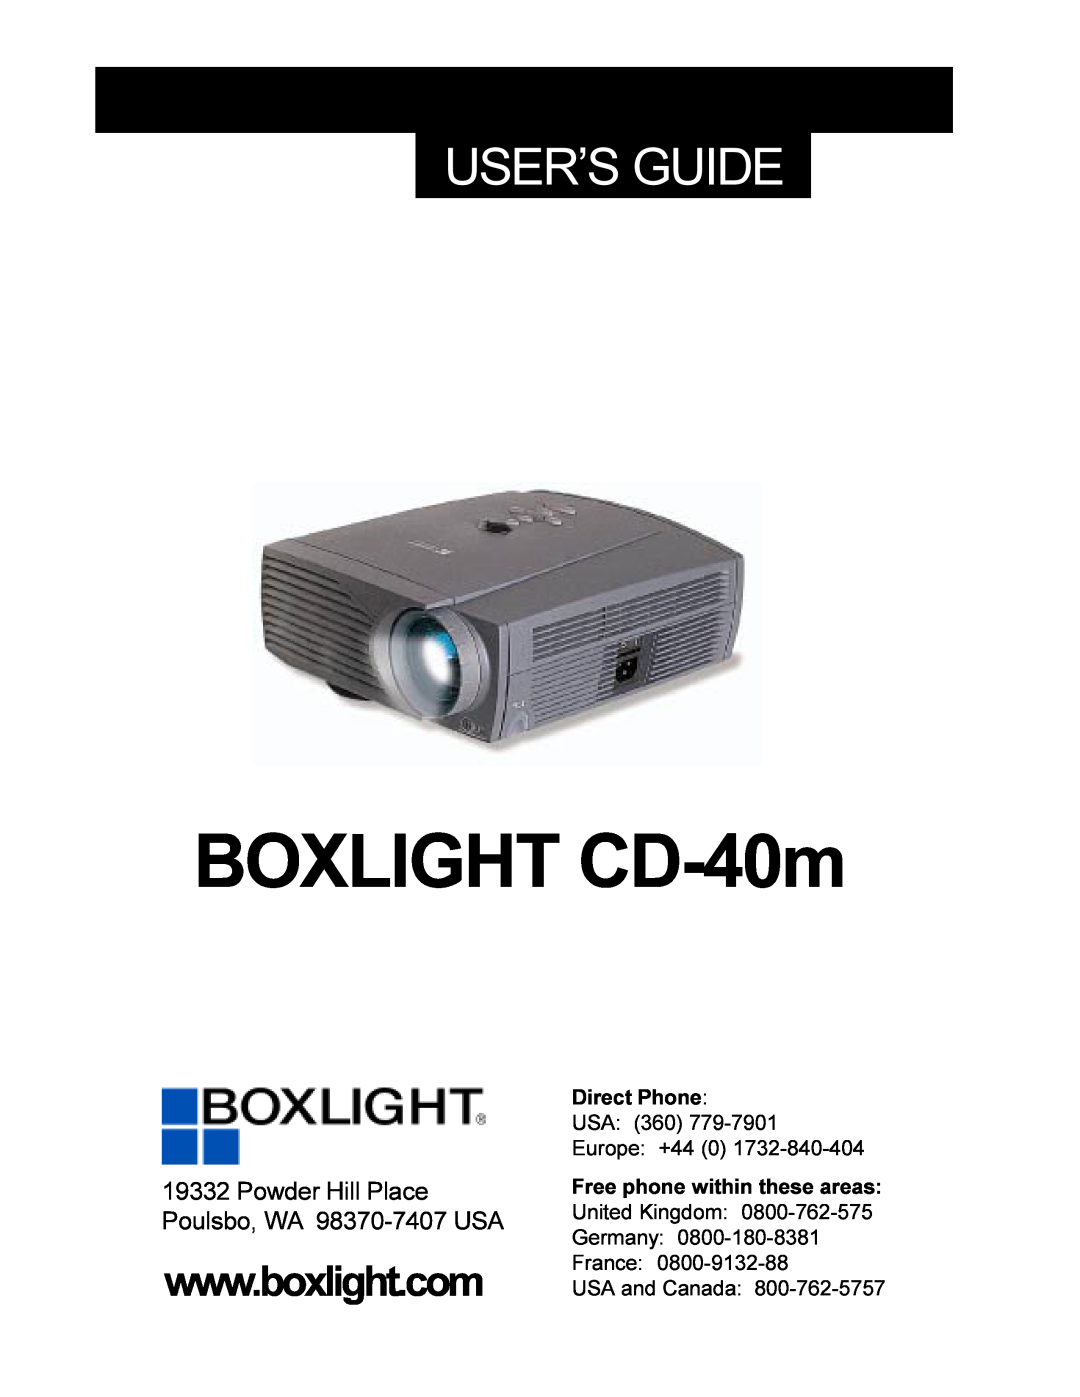 BOXLIGHT manual BOXLIGHT CD-40m, User’S Guide, Powder Hill Place Poulsbo, WA 98370-7407 USA, Direct Phone 